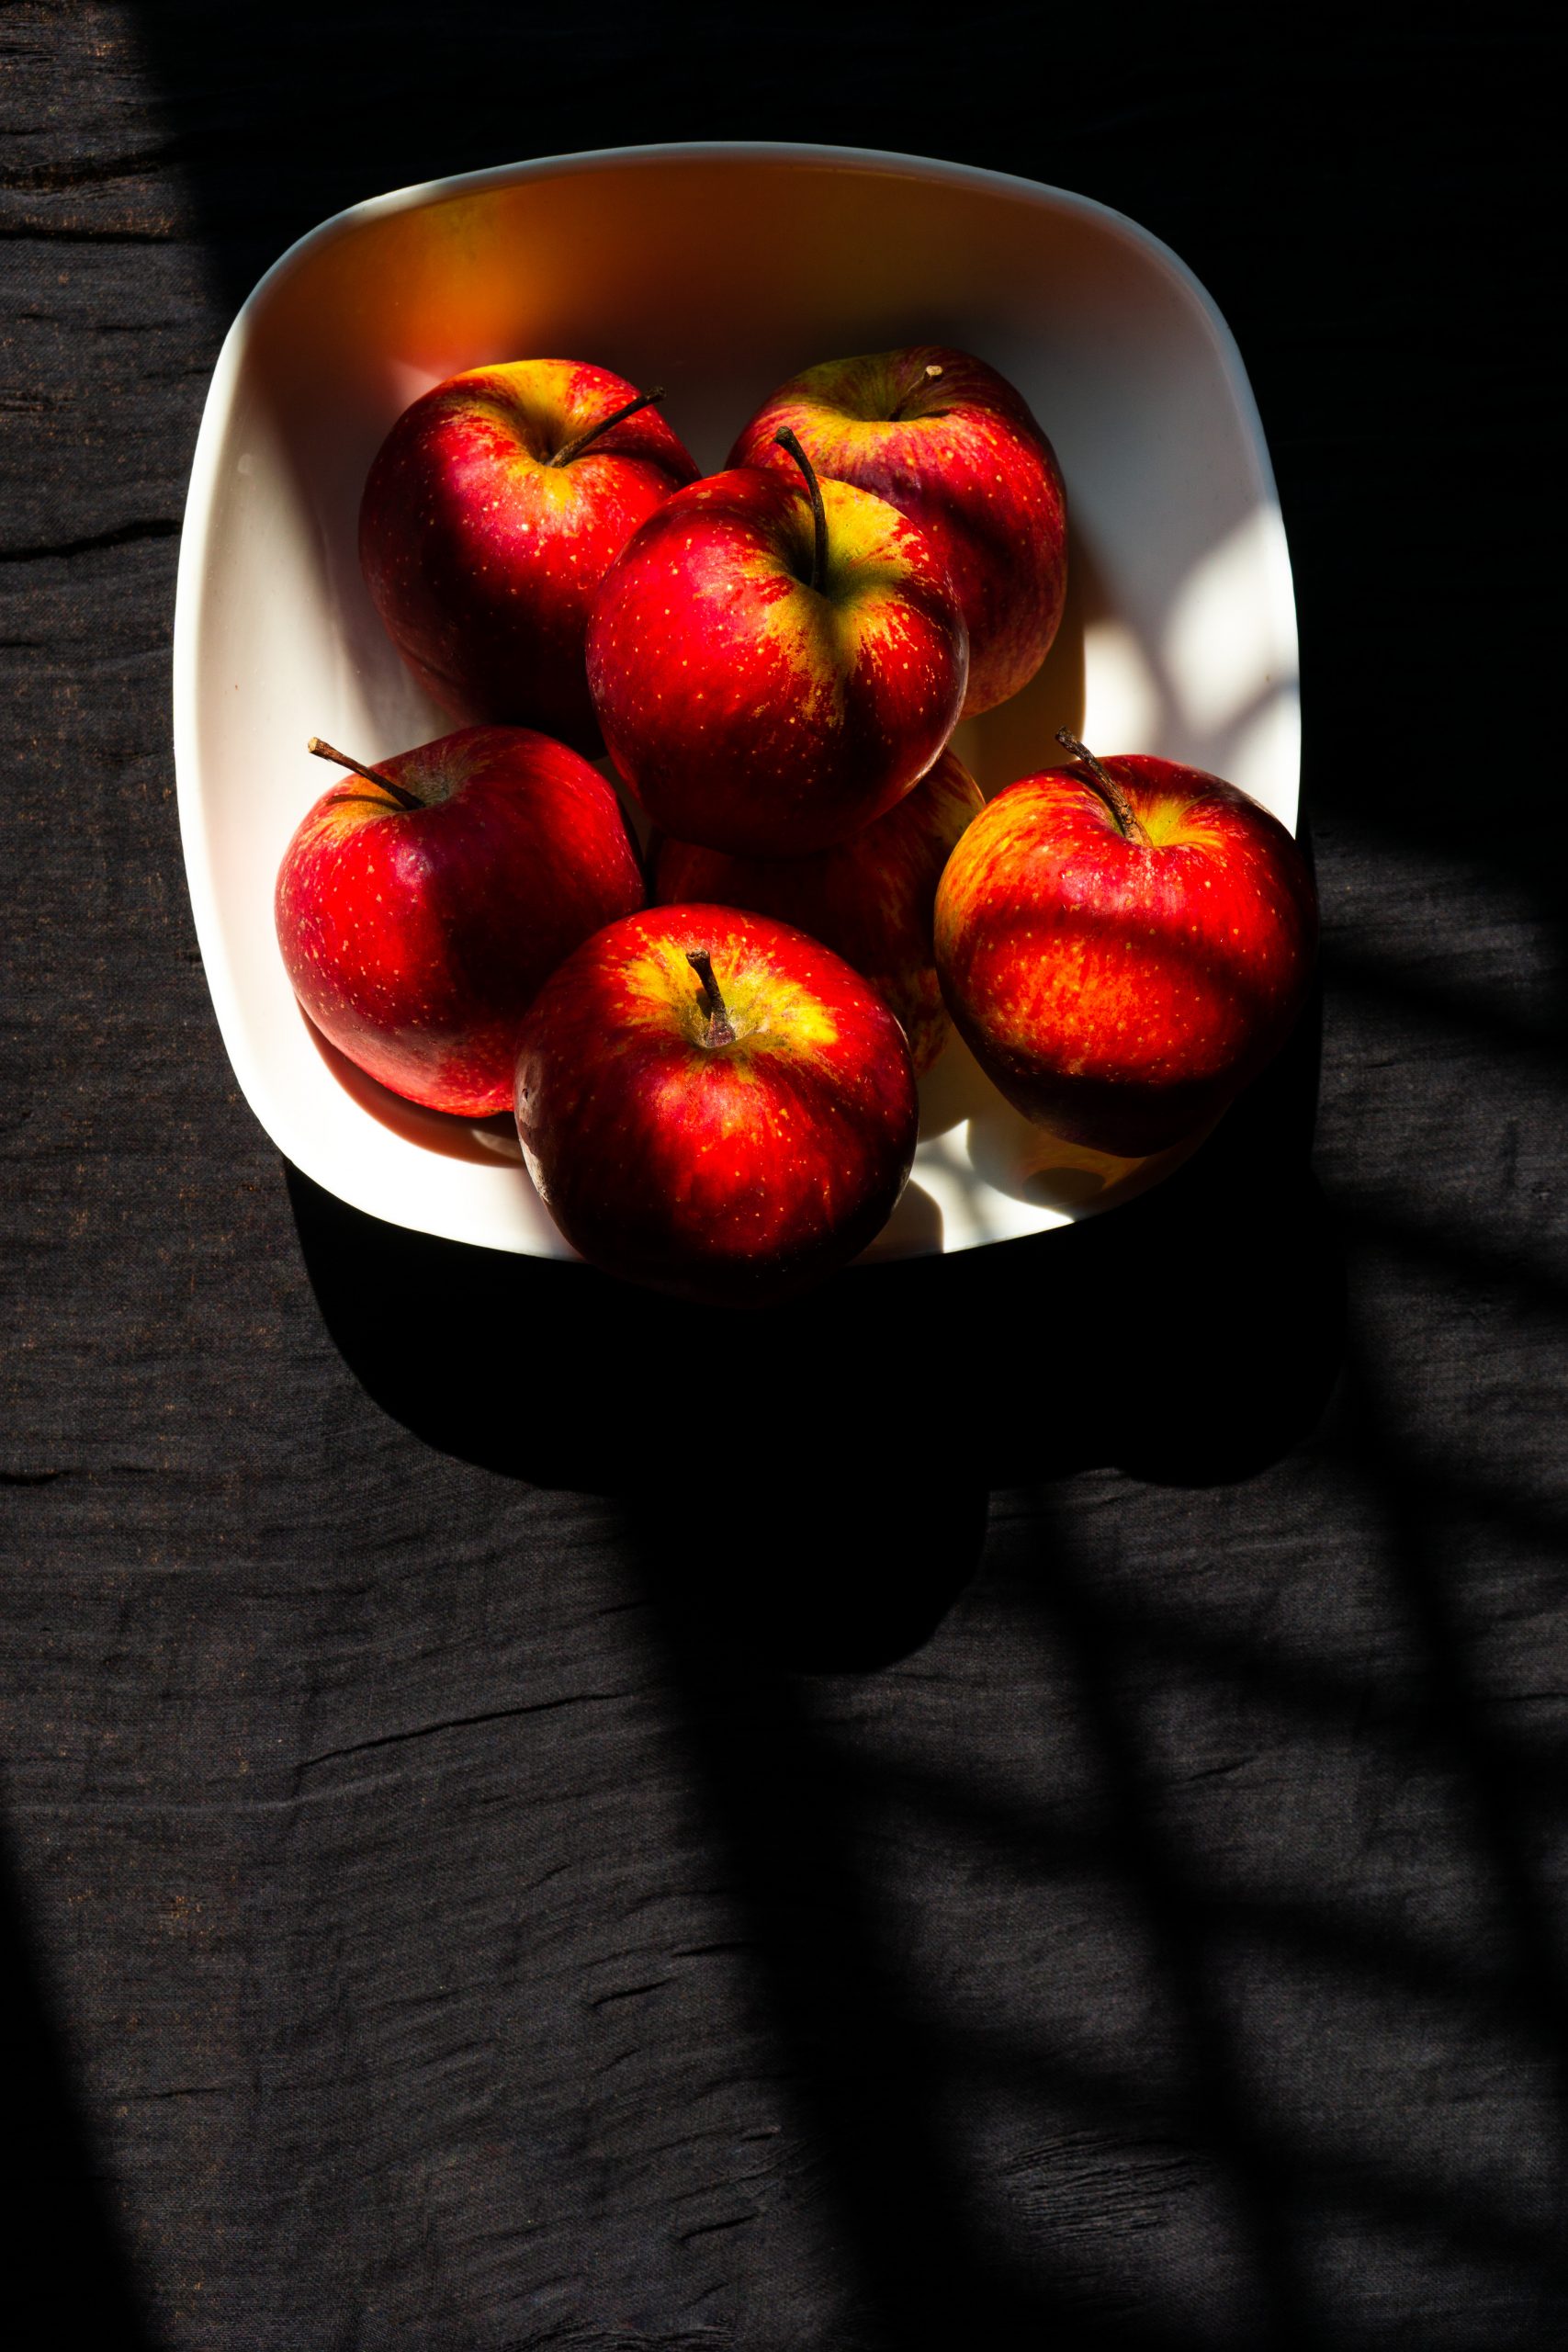 Apples in bowl